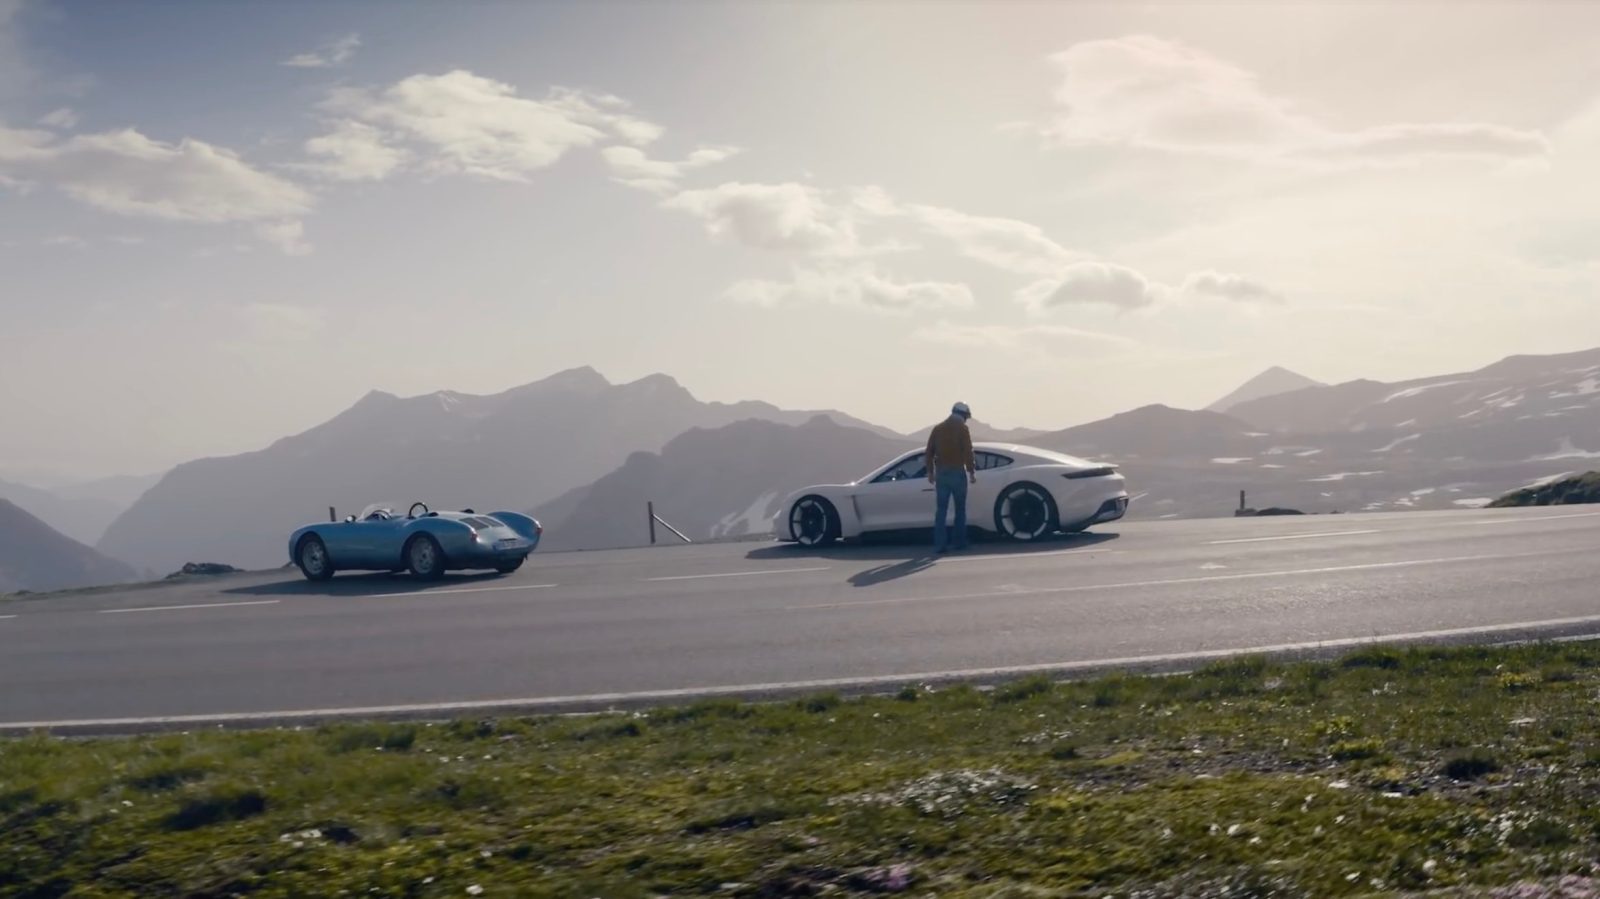 DJI, Porsche, and the Großglockner mountain pass﻿! Does it get much better than this? [video]